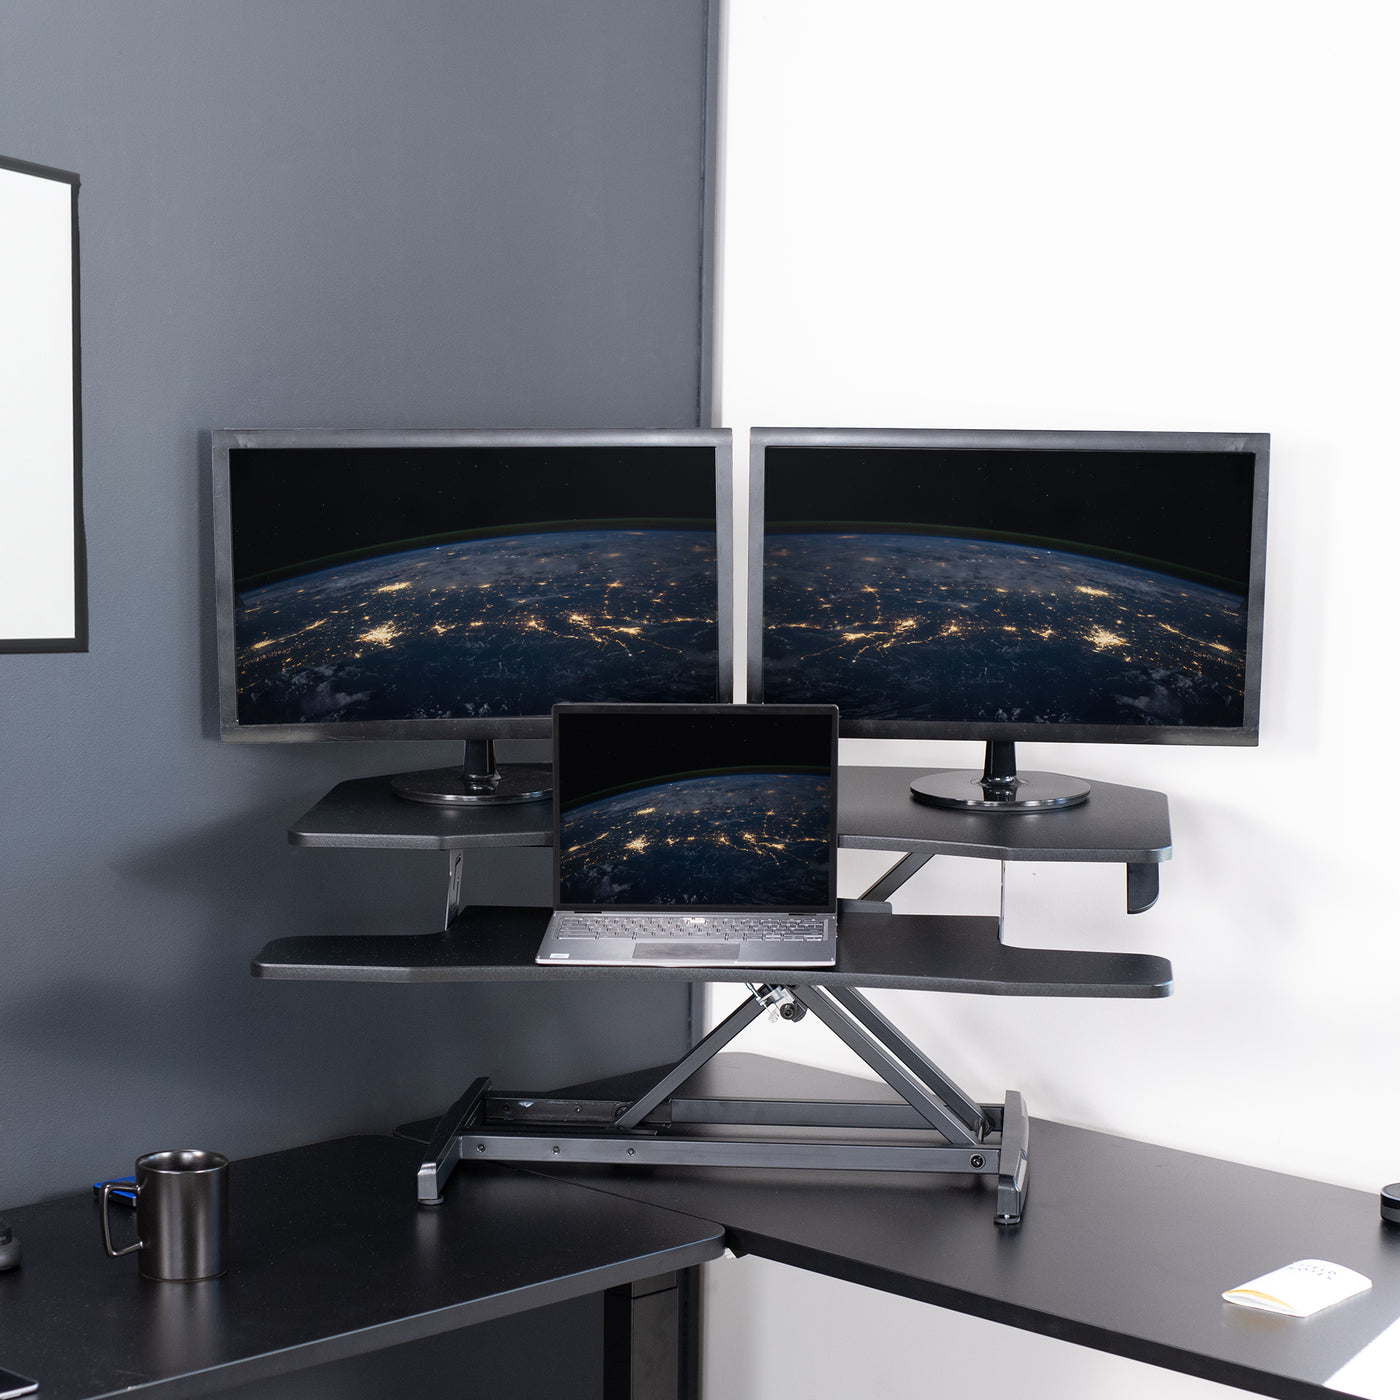 Heavy-duty height adjustable desk converter monitor riser for corner desk workstation.